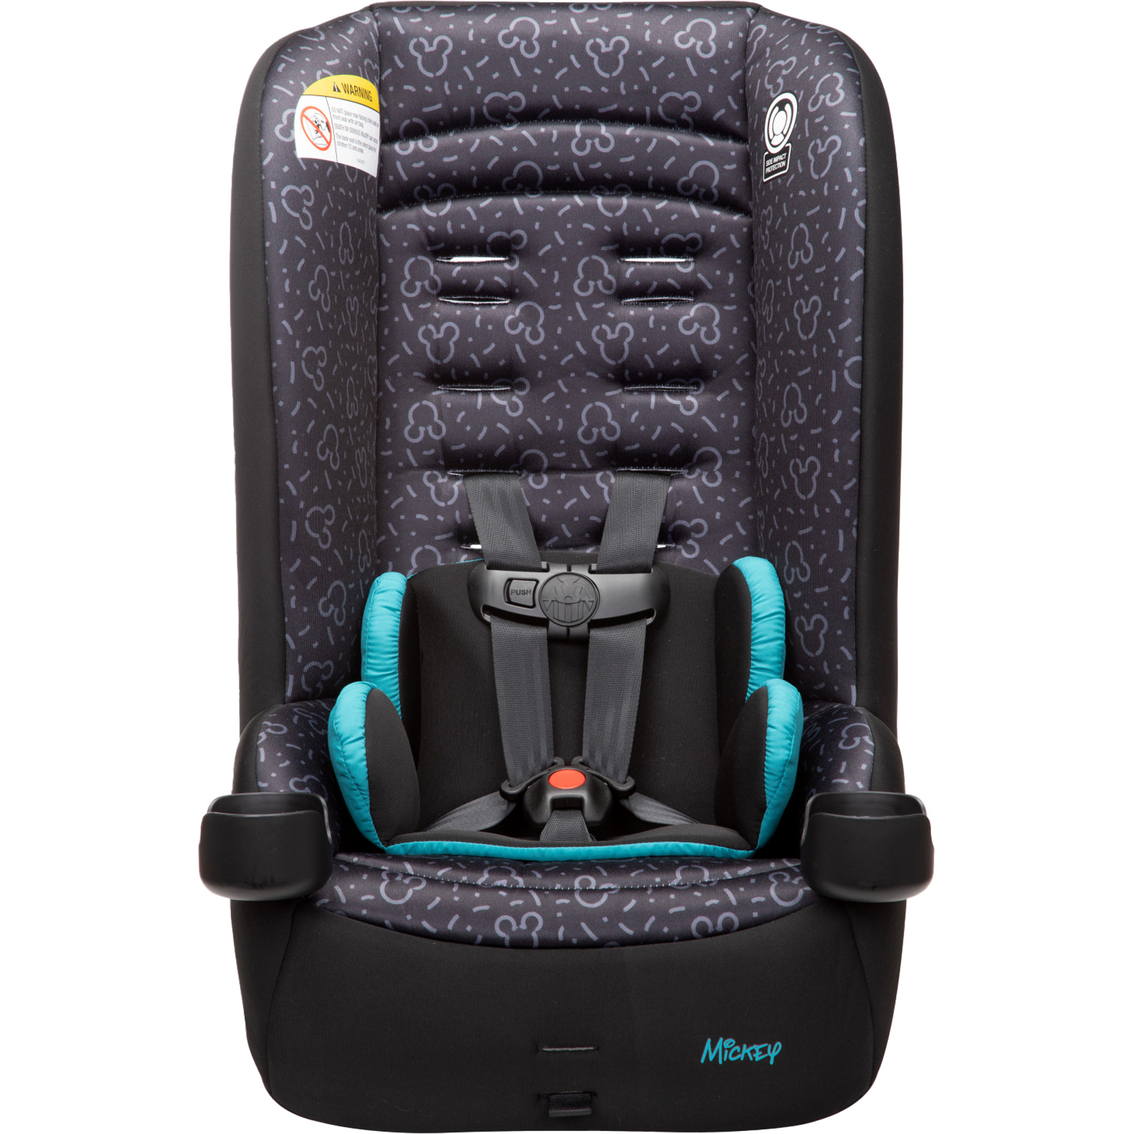 Disney Baby Jive 2 in 1 Convertible Car Seat - Image 4 of 10